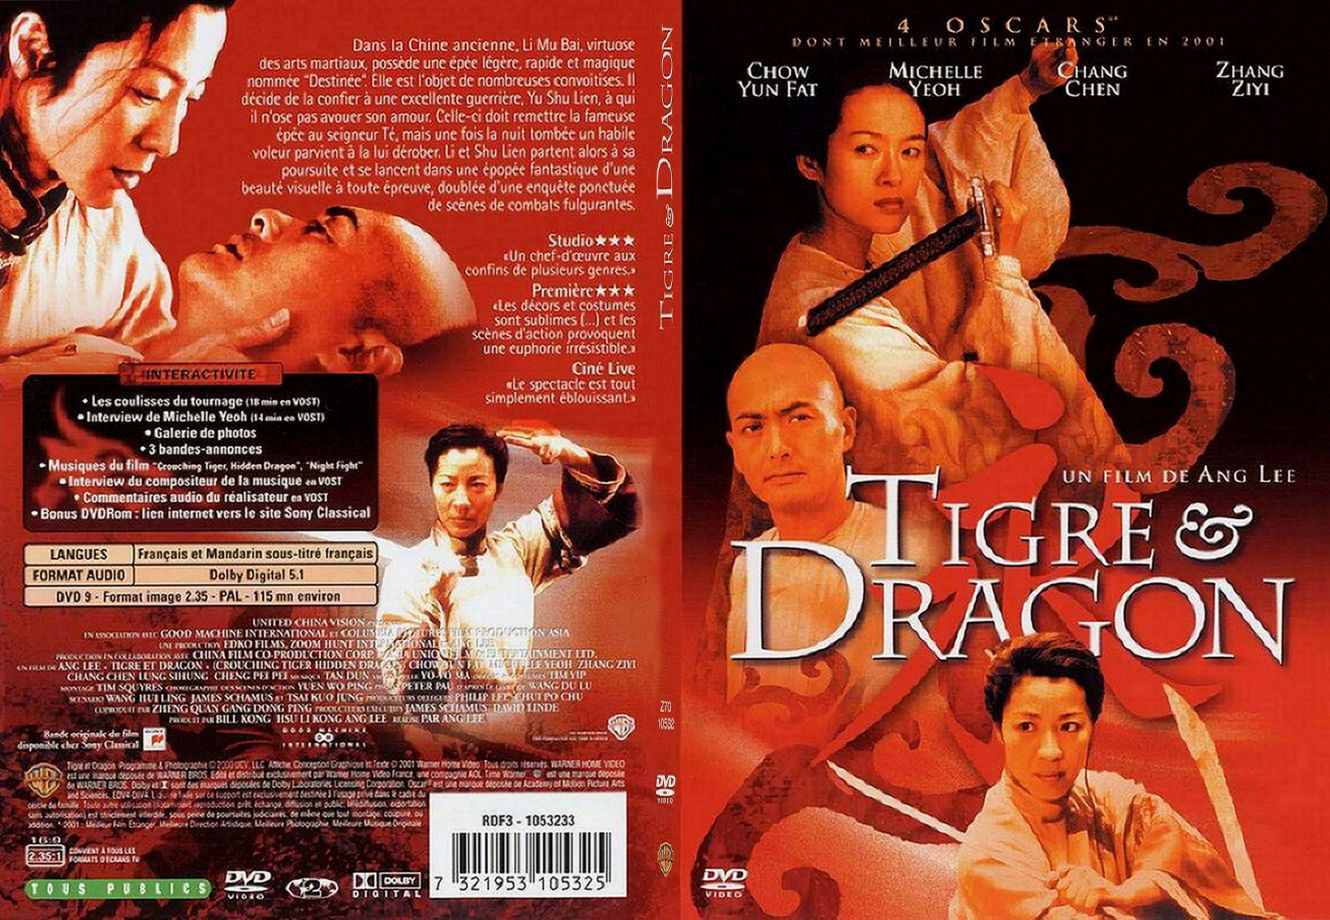 Jaquette DVD Tigre et Dragon - SLIM